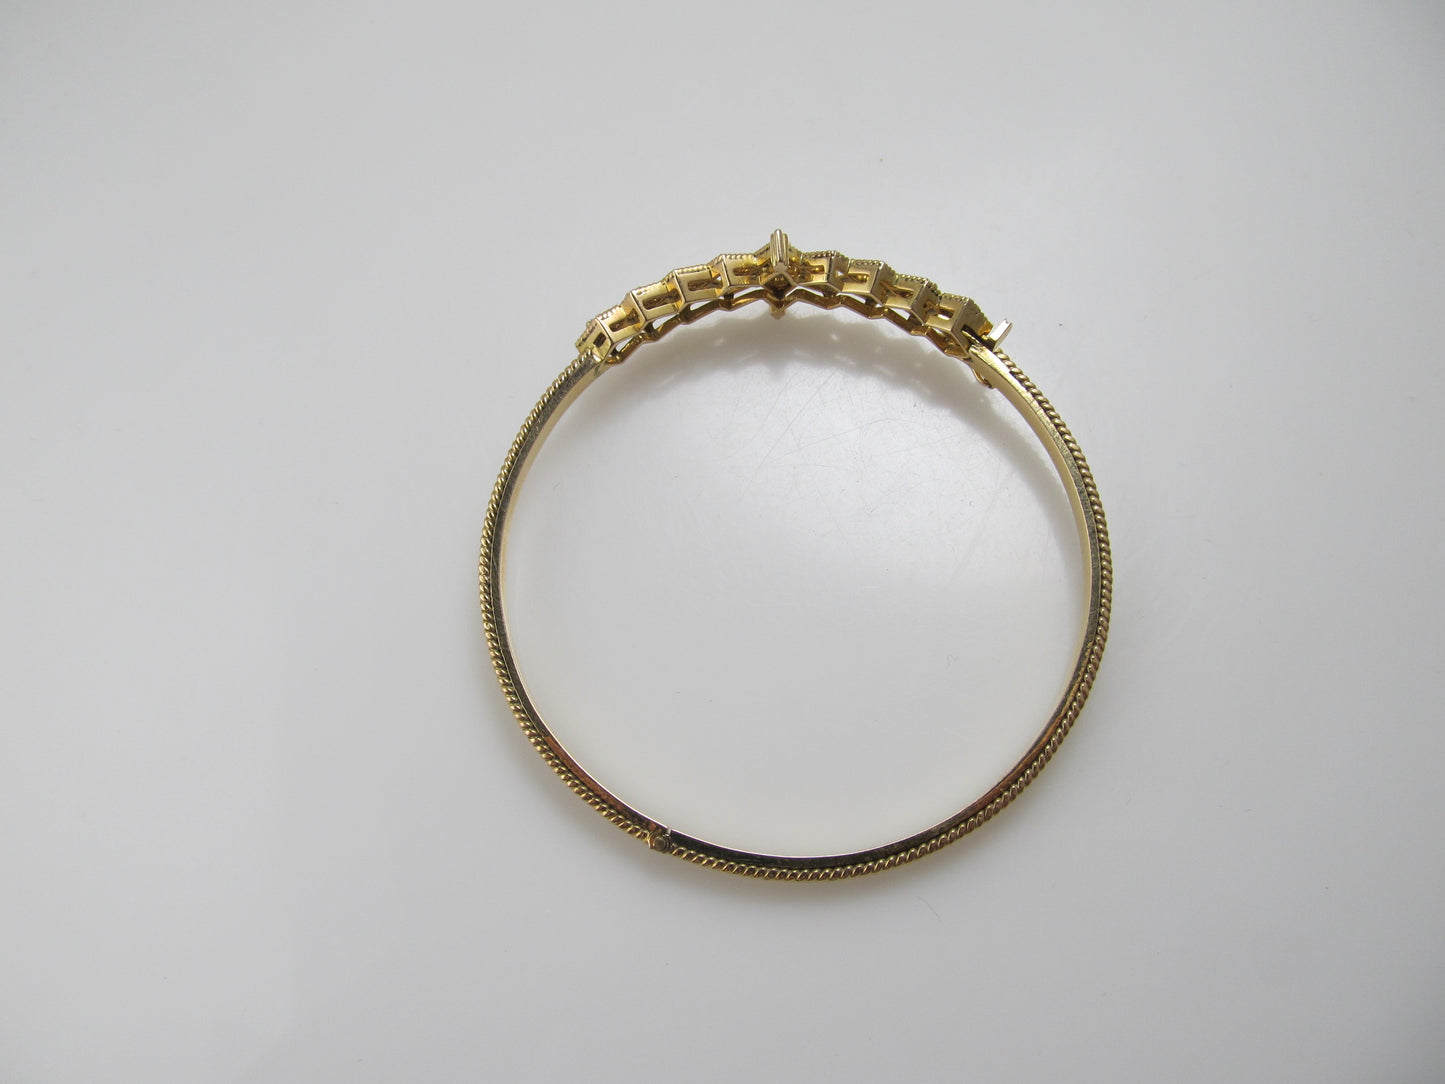 Handmade yellow gold diamond bangle bracelet